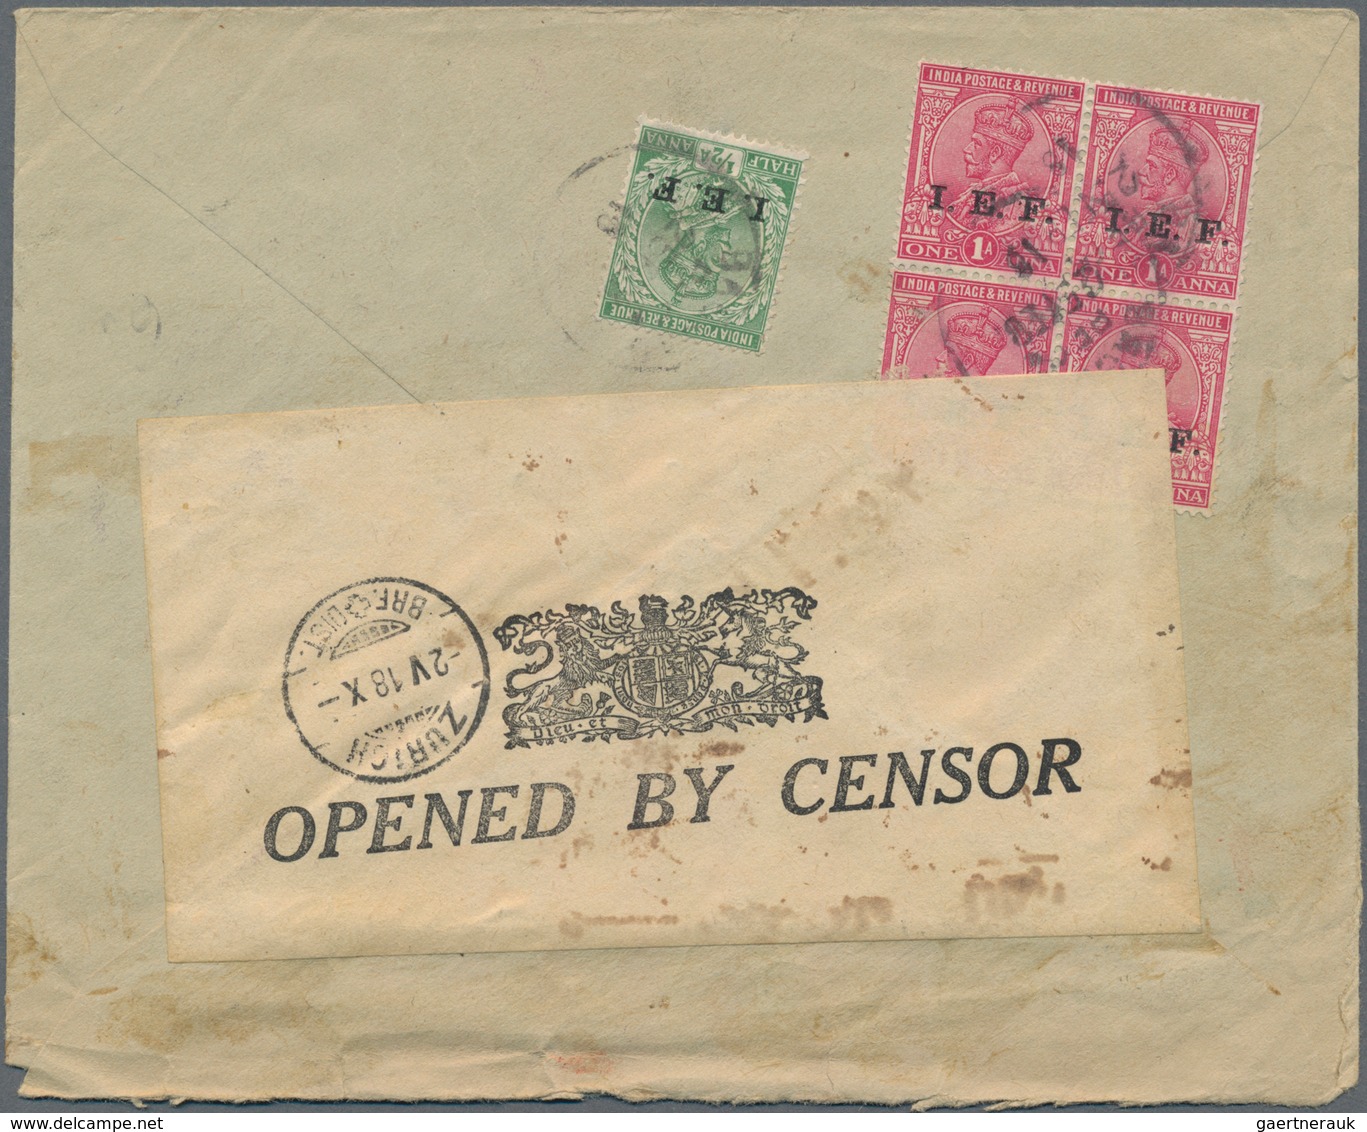 Indien - Feldpost: 1918 Registered And Censored Cover From Baghdad To Zurich, Switzerland Franked On - Militärpostmarken